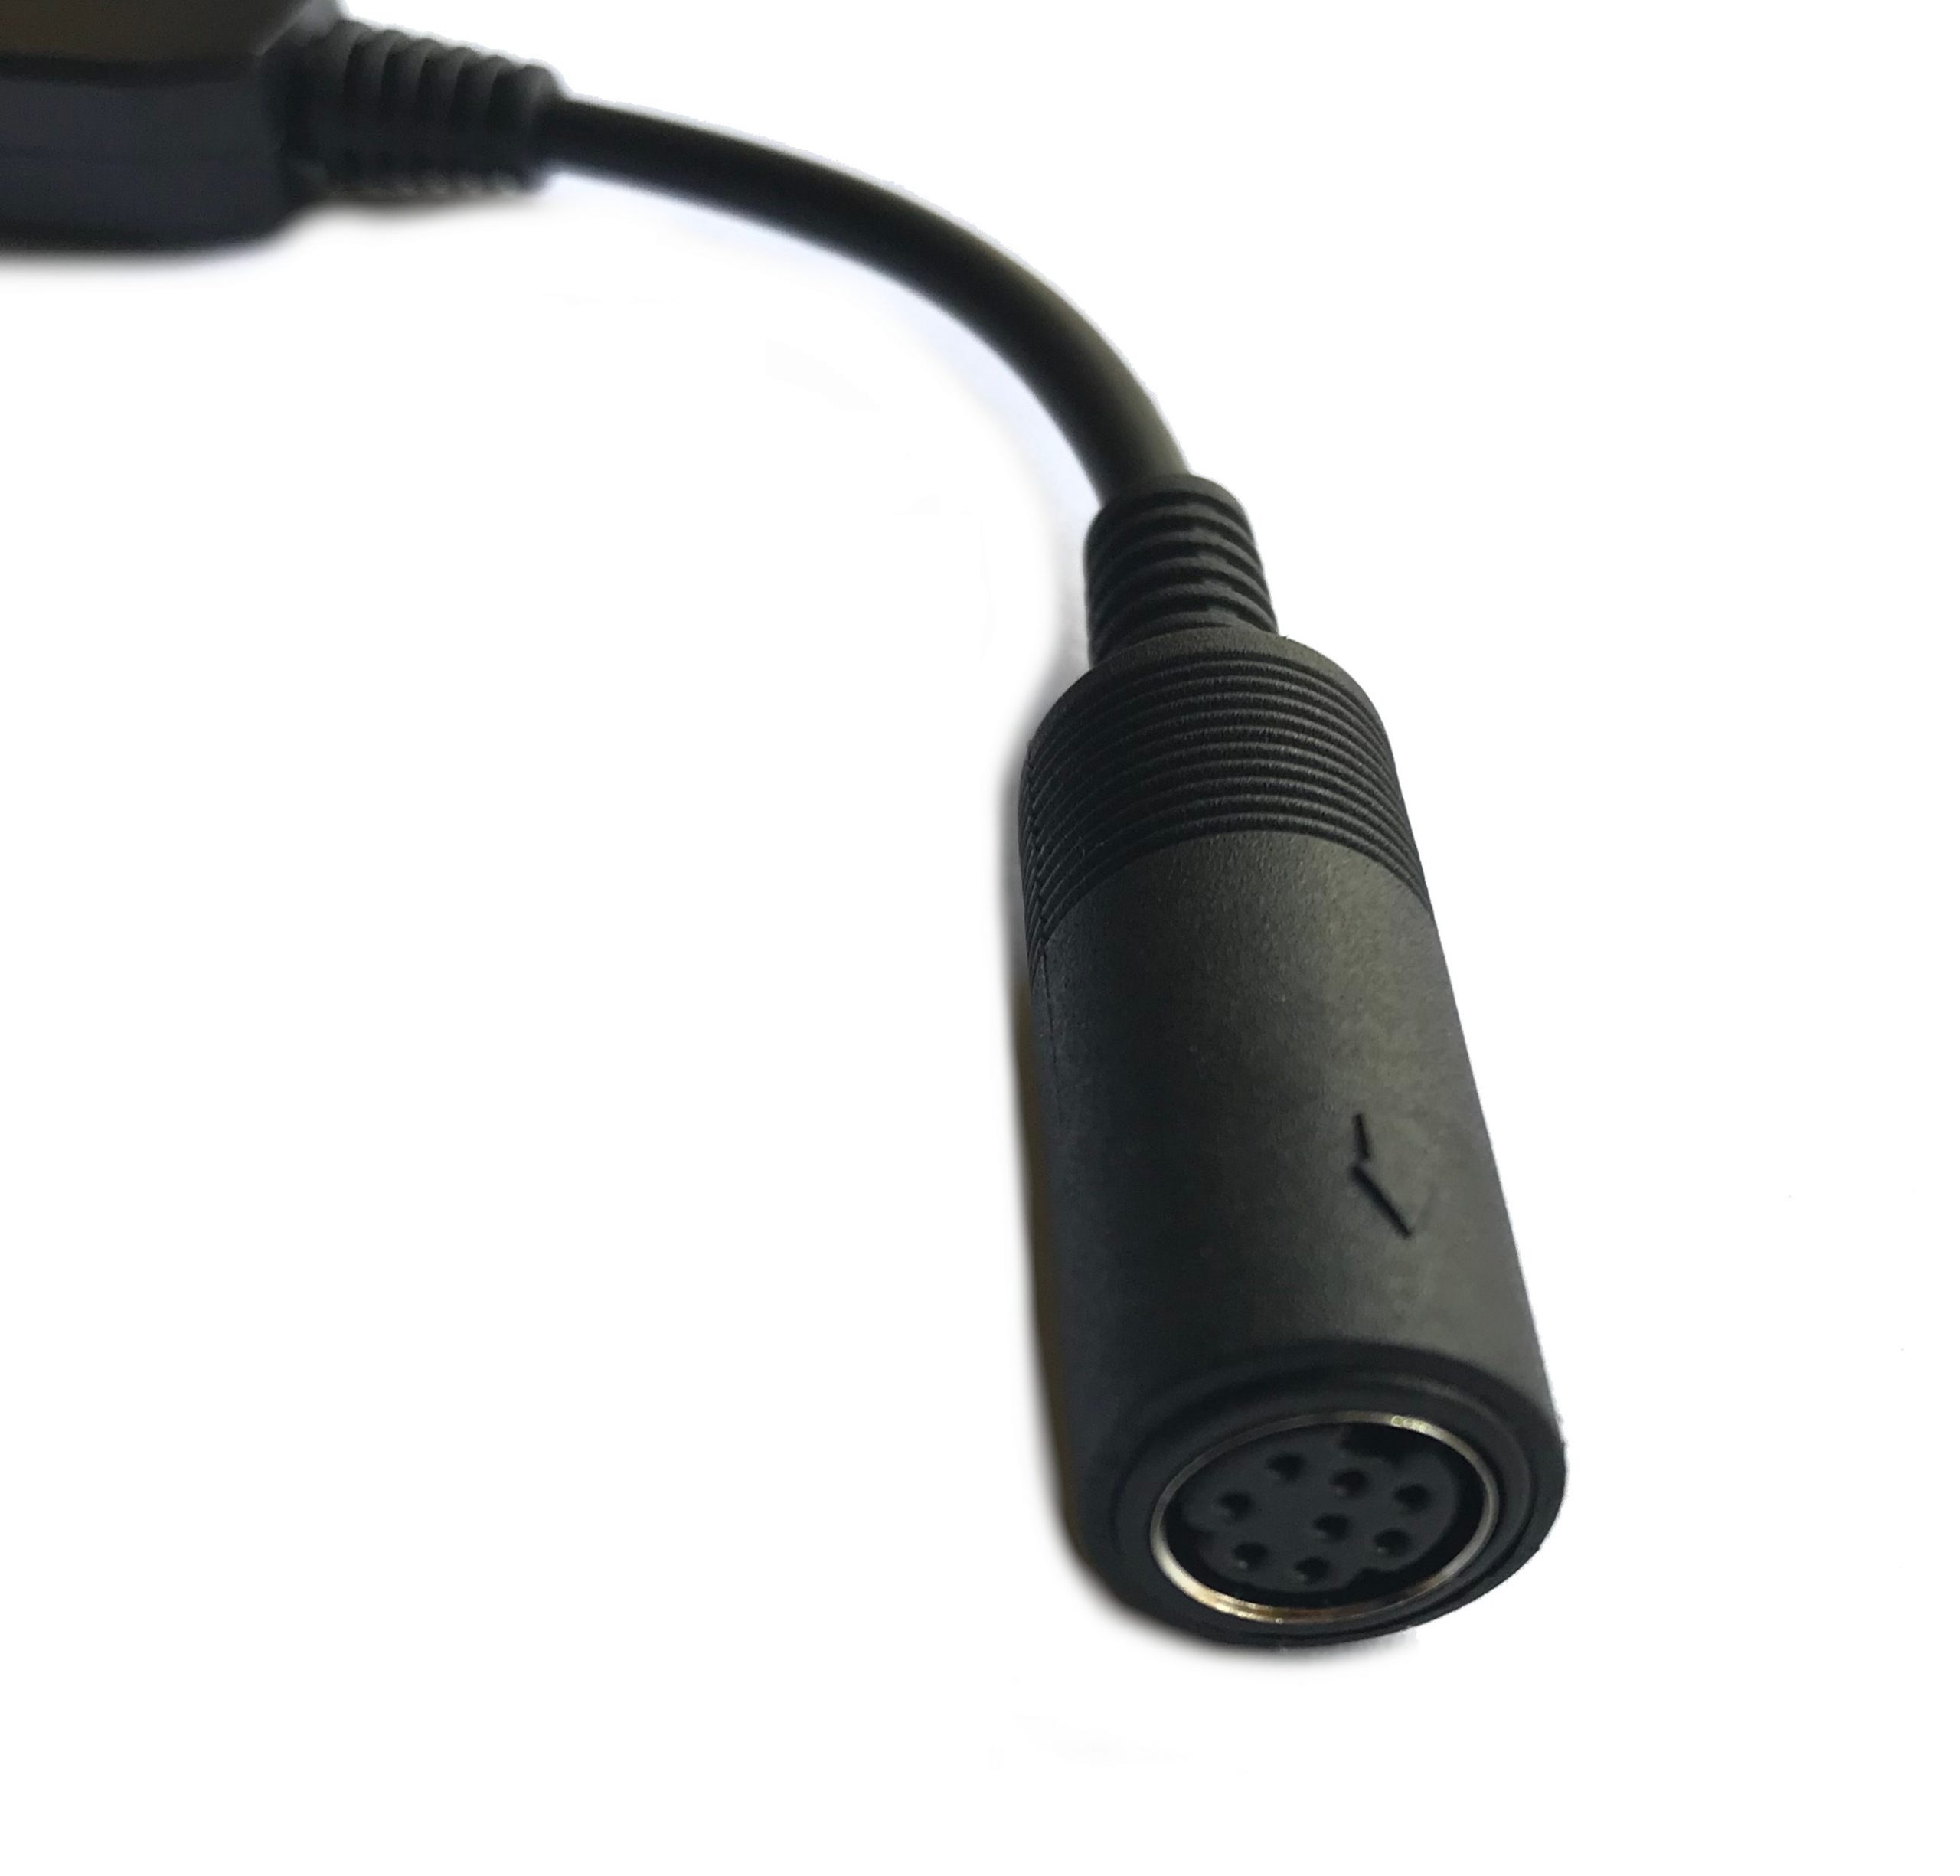 tinkerBOY Apple Newton Keyboard to USB Converter Adapter